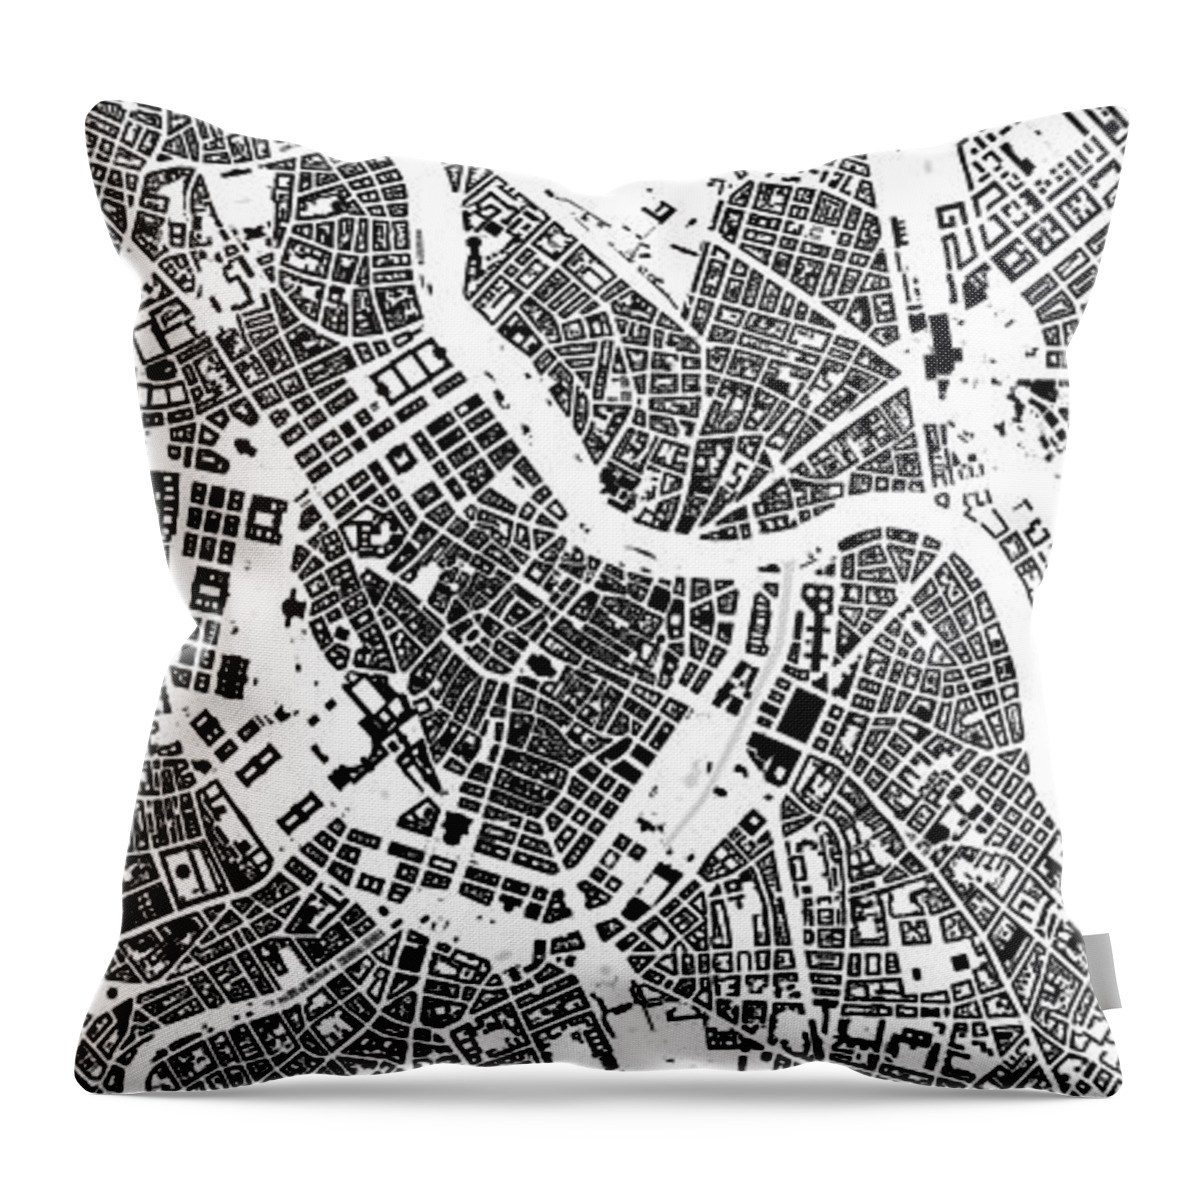 City Throw Pillow featuring the digital art Vienna black and white building city map by Christian Pauschert